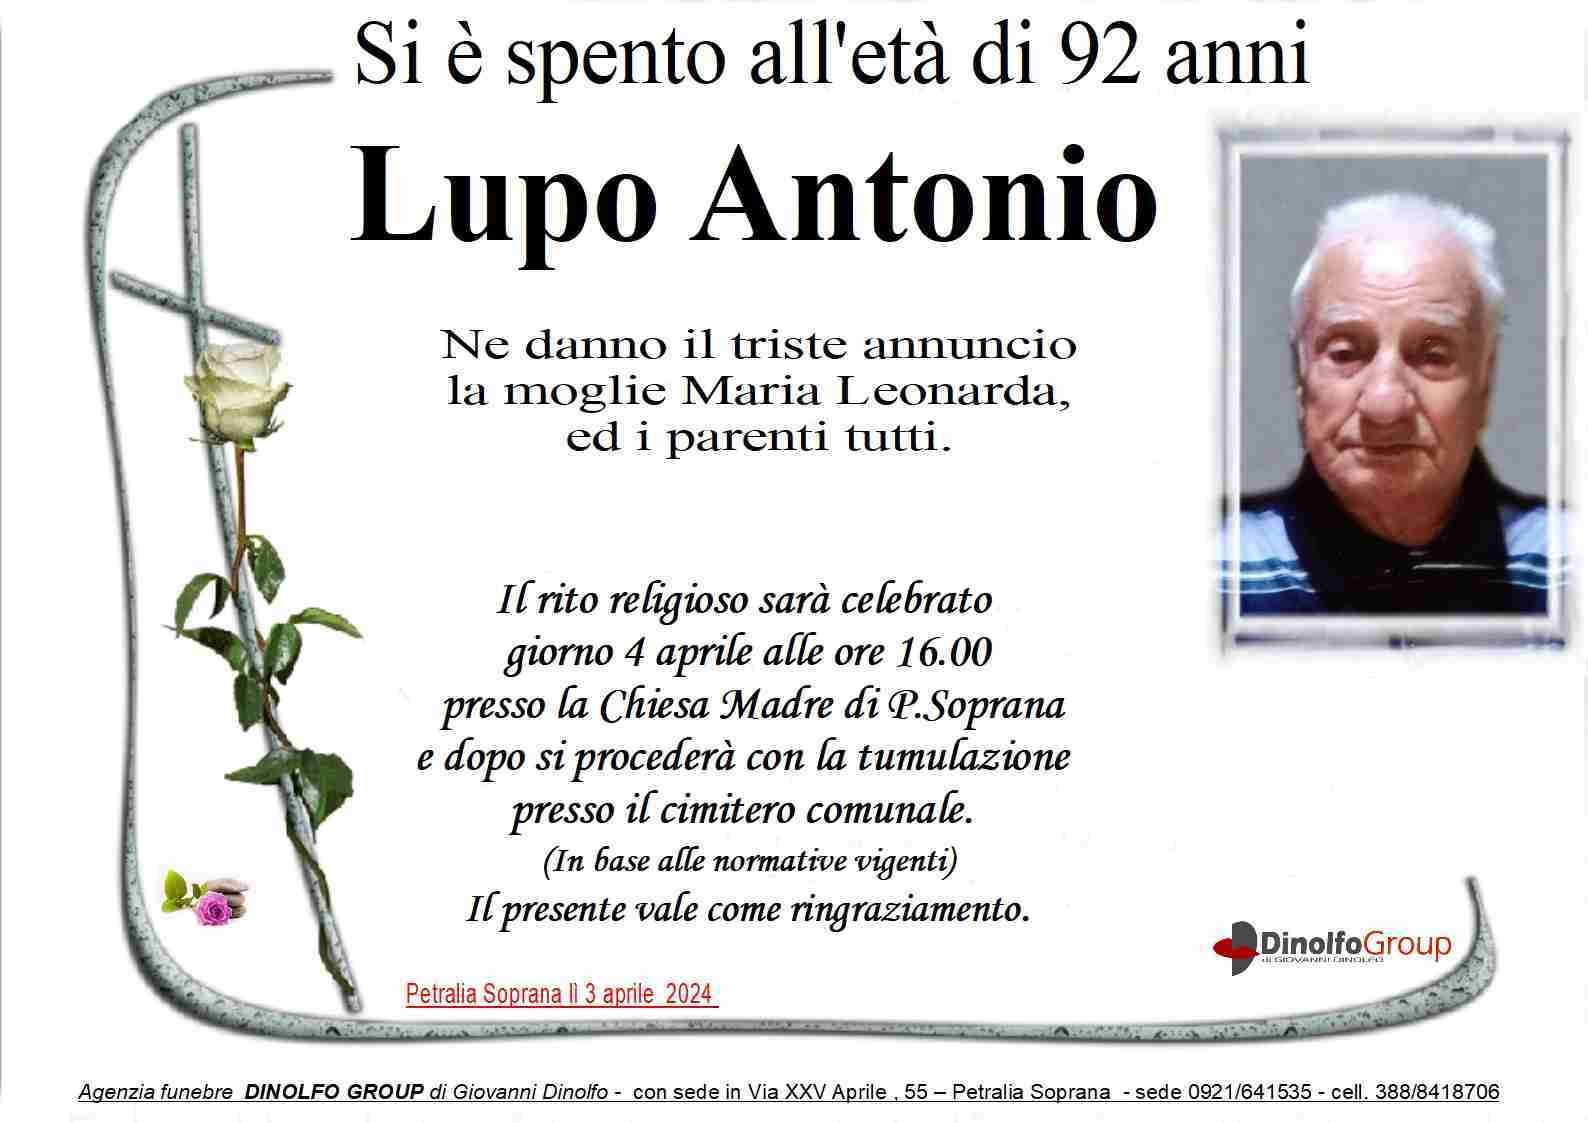 Antonio Lupo